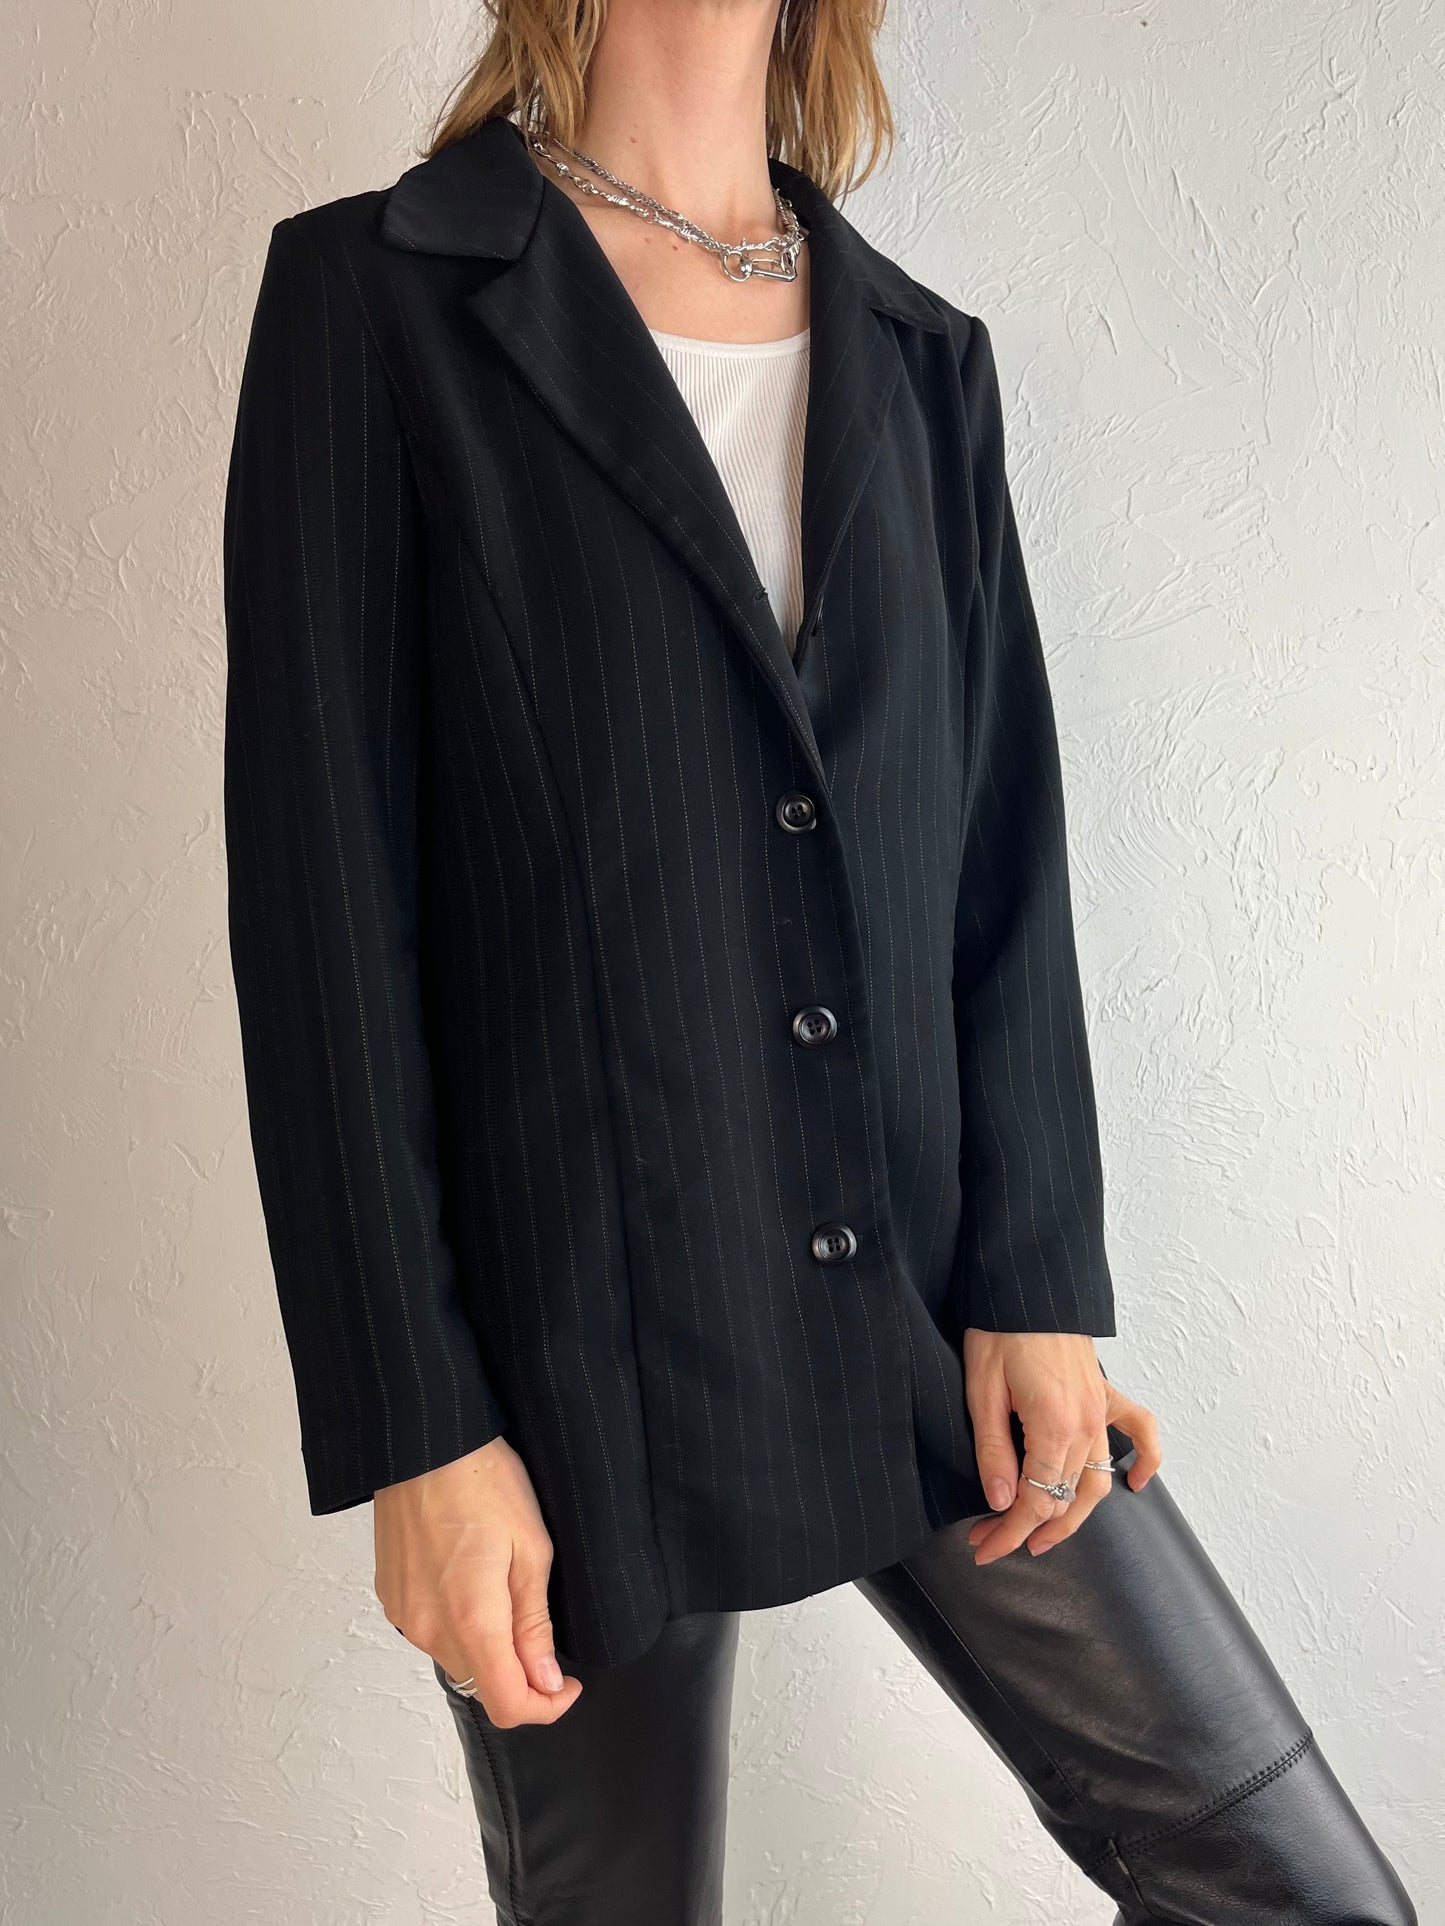 90s 'Jessica' Black Pinstripe Blazer Jacket / Medium